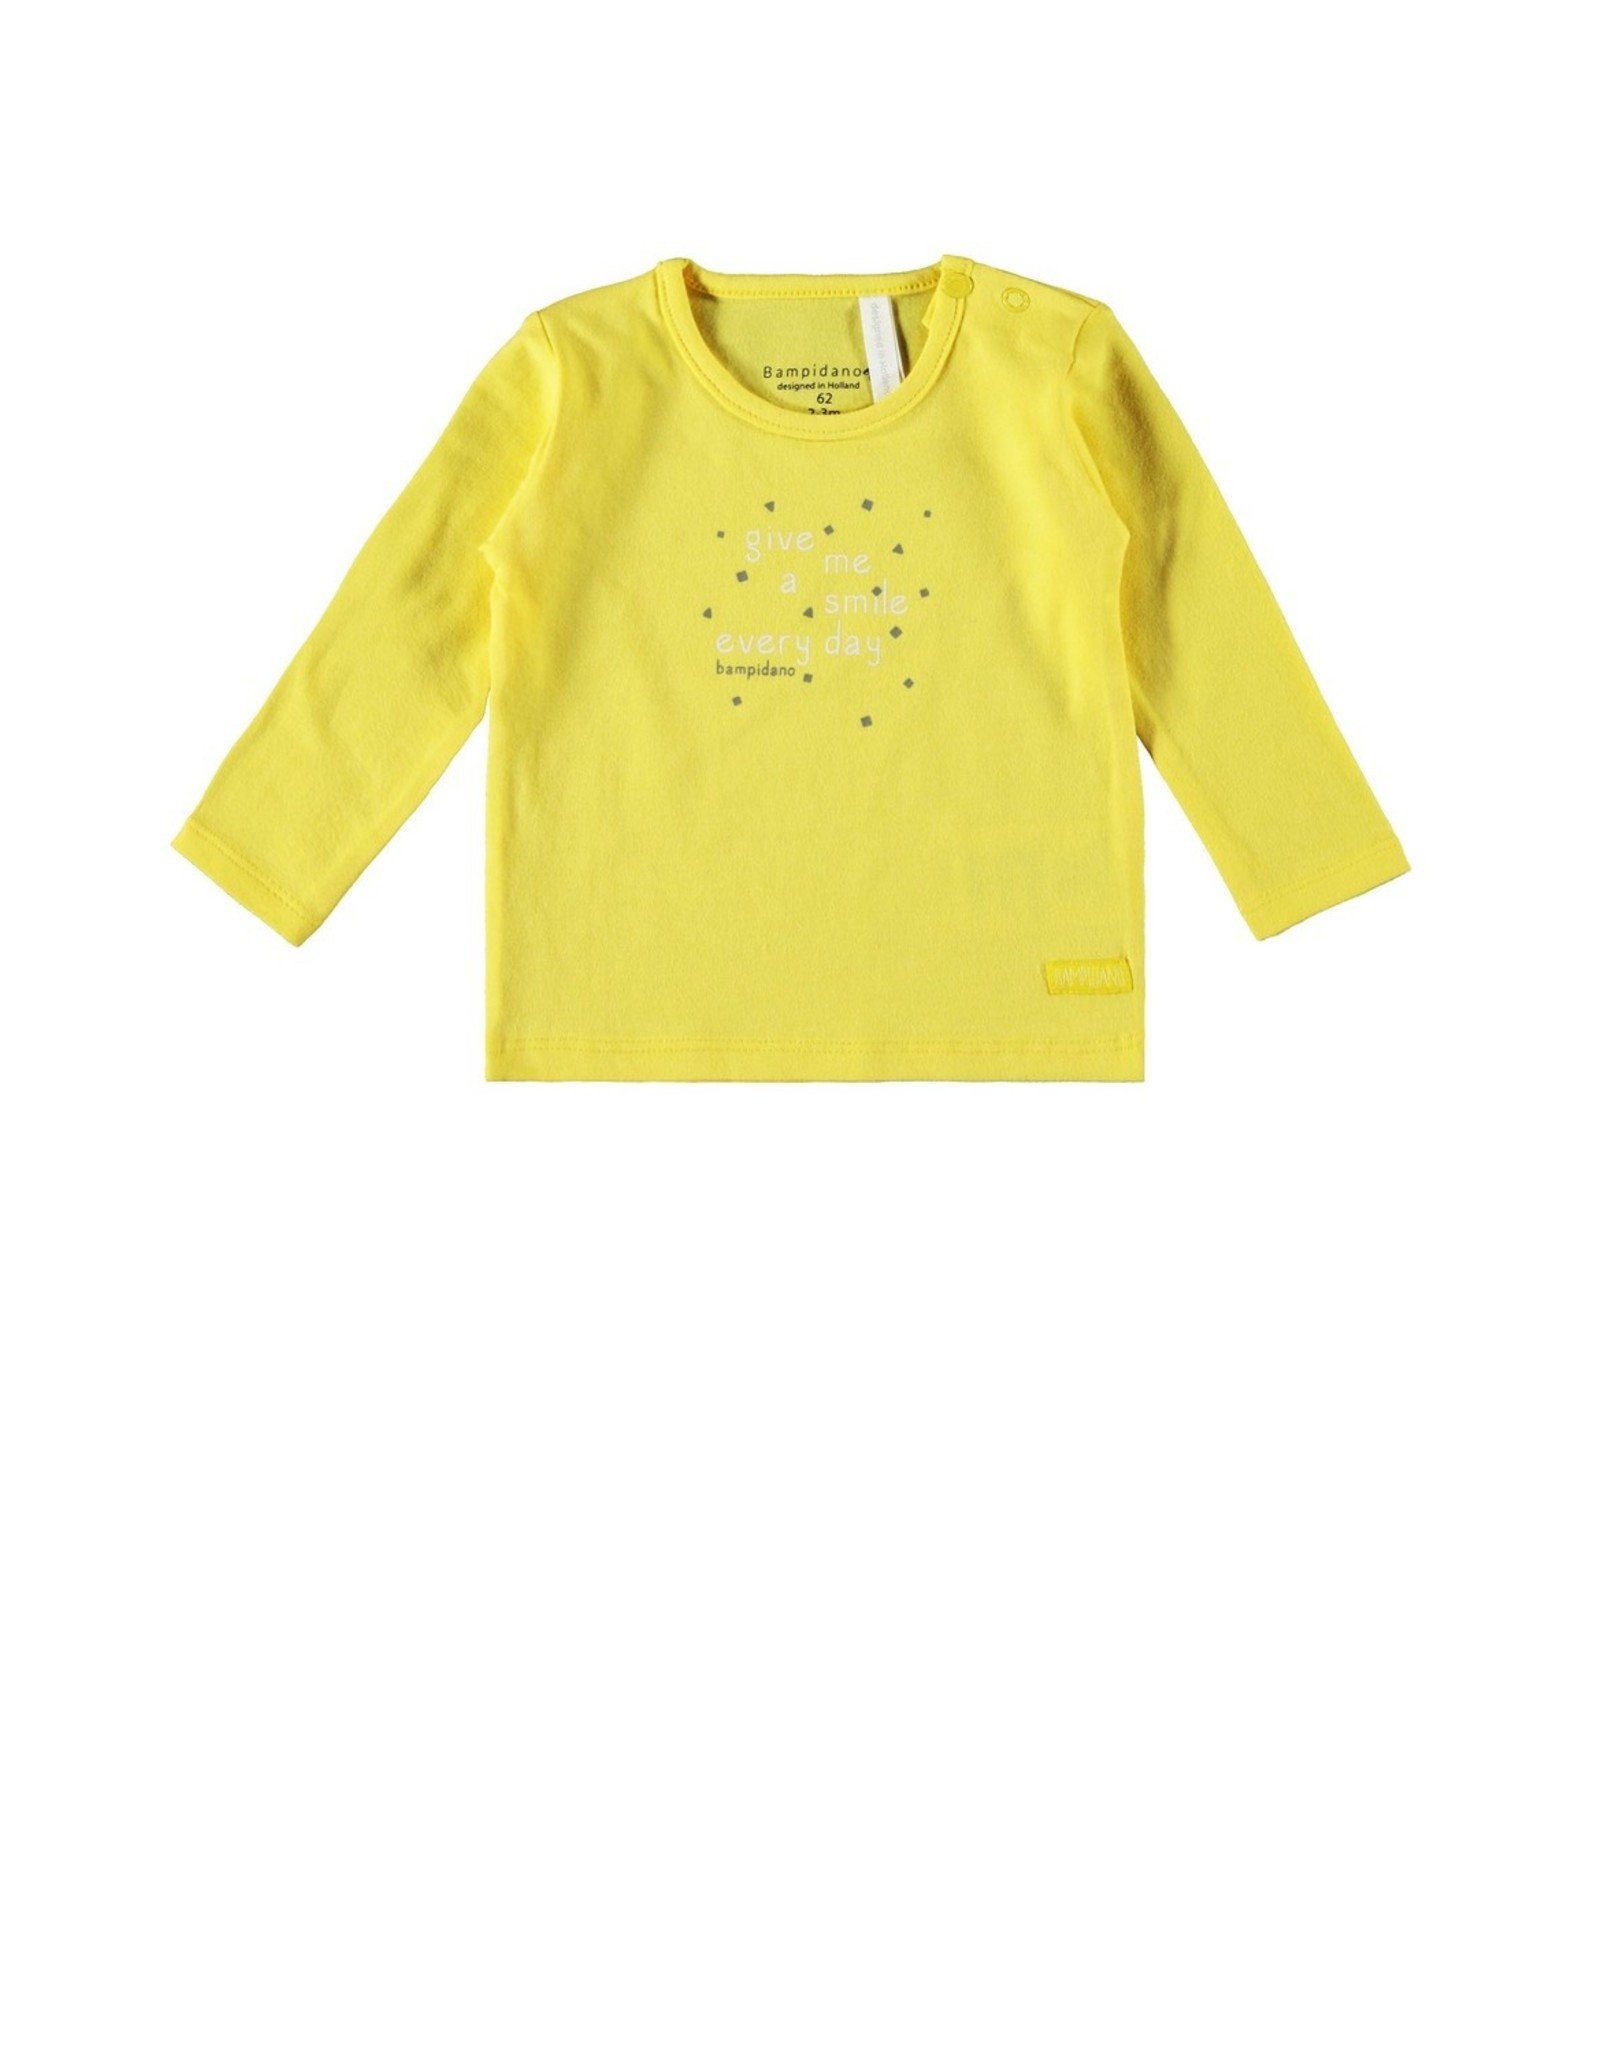 Bampidano New Born T-shirt l/s plain MY EYES START TO SHINE / GIVE ME A SMILE, yellow